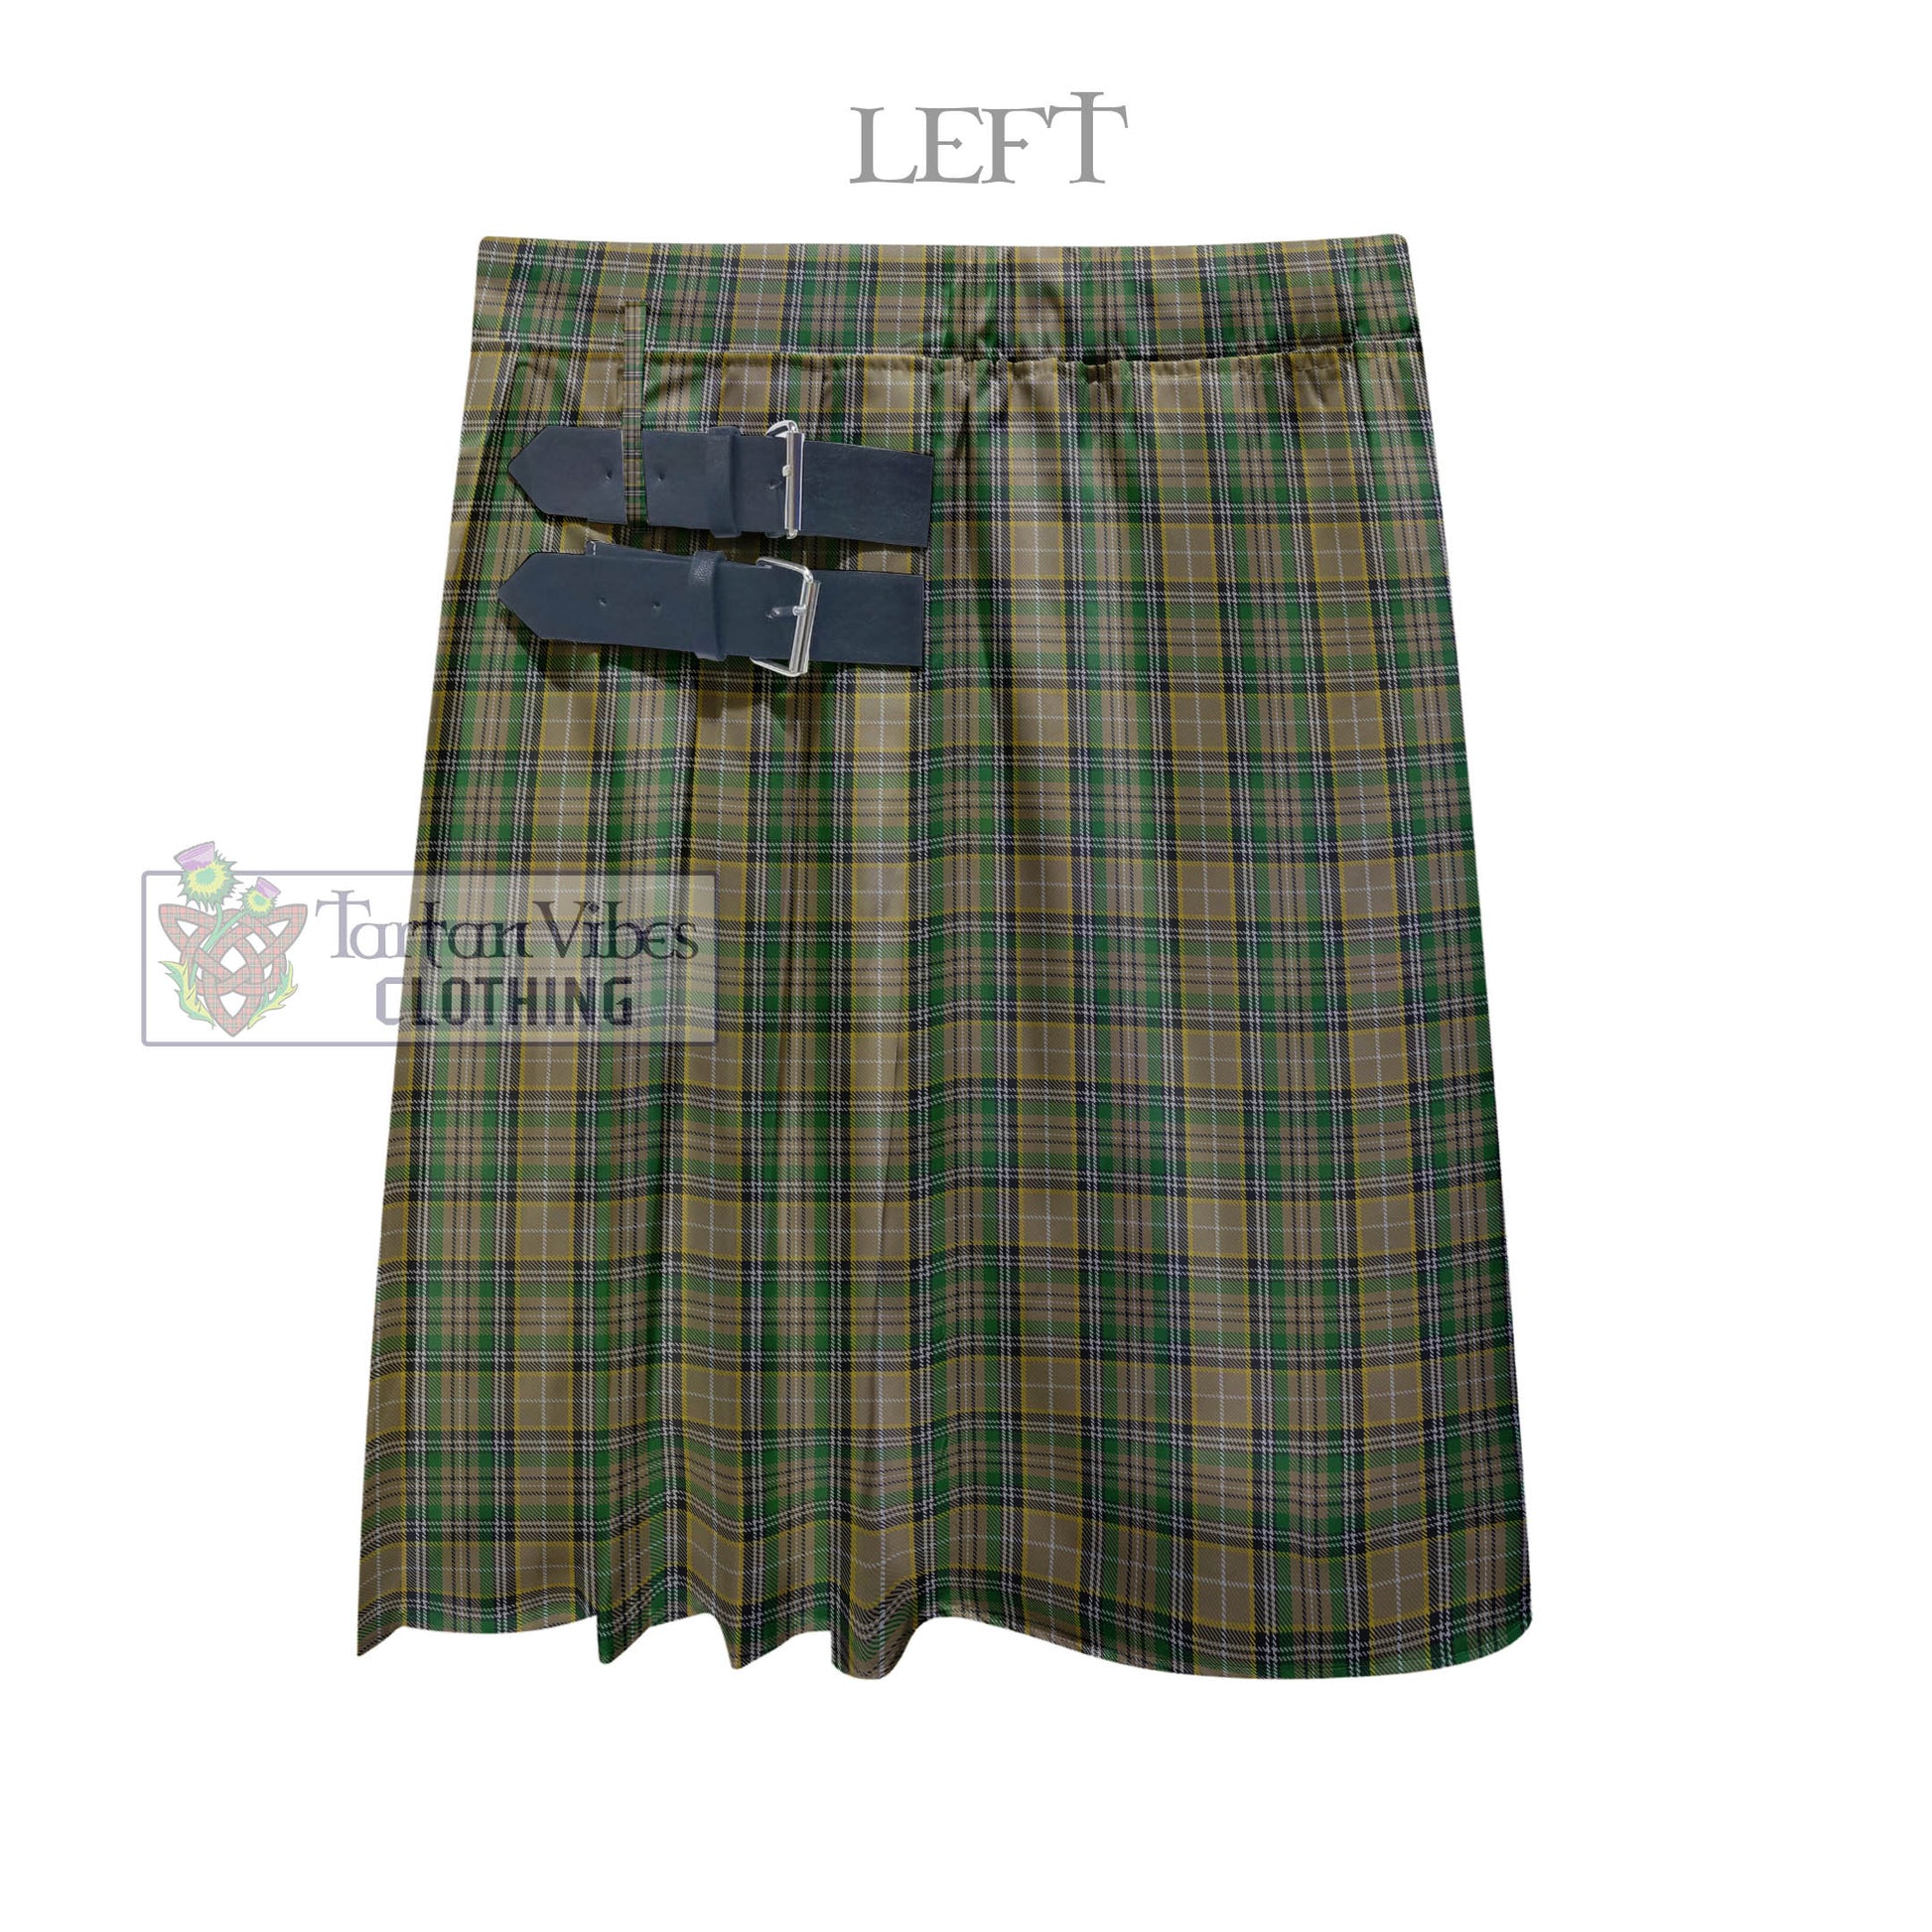 Tartan Vibes Clothing O'Farrell Tartan Men's Pleated Skirt - Fashion Casual Retro Scottish Style